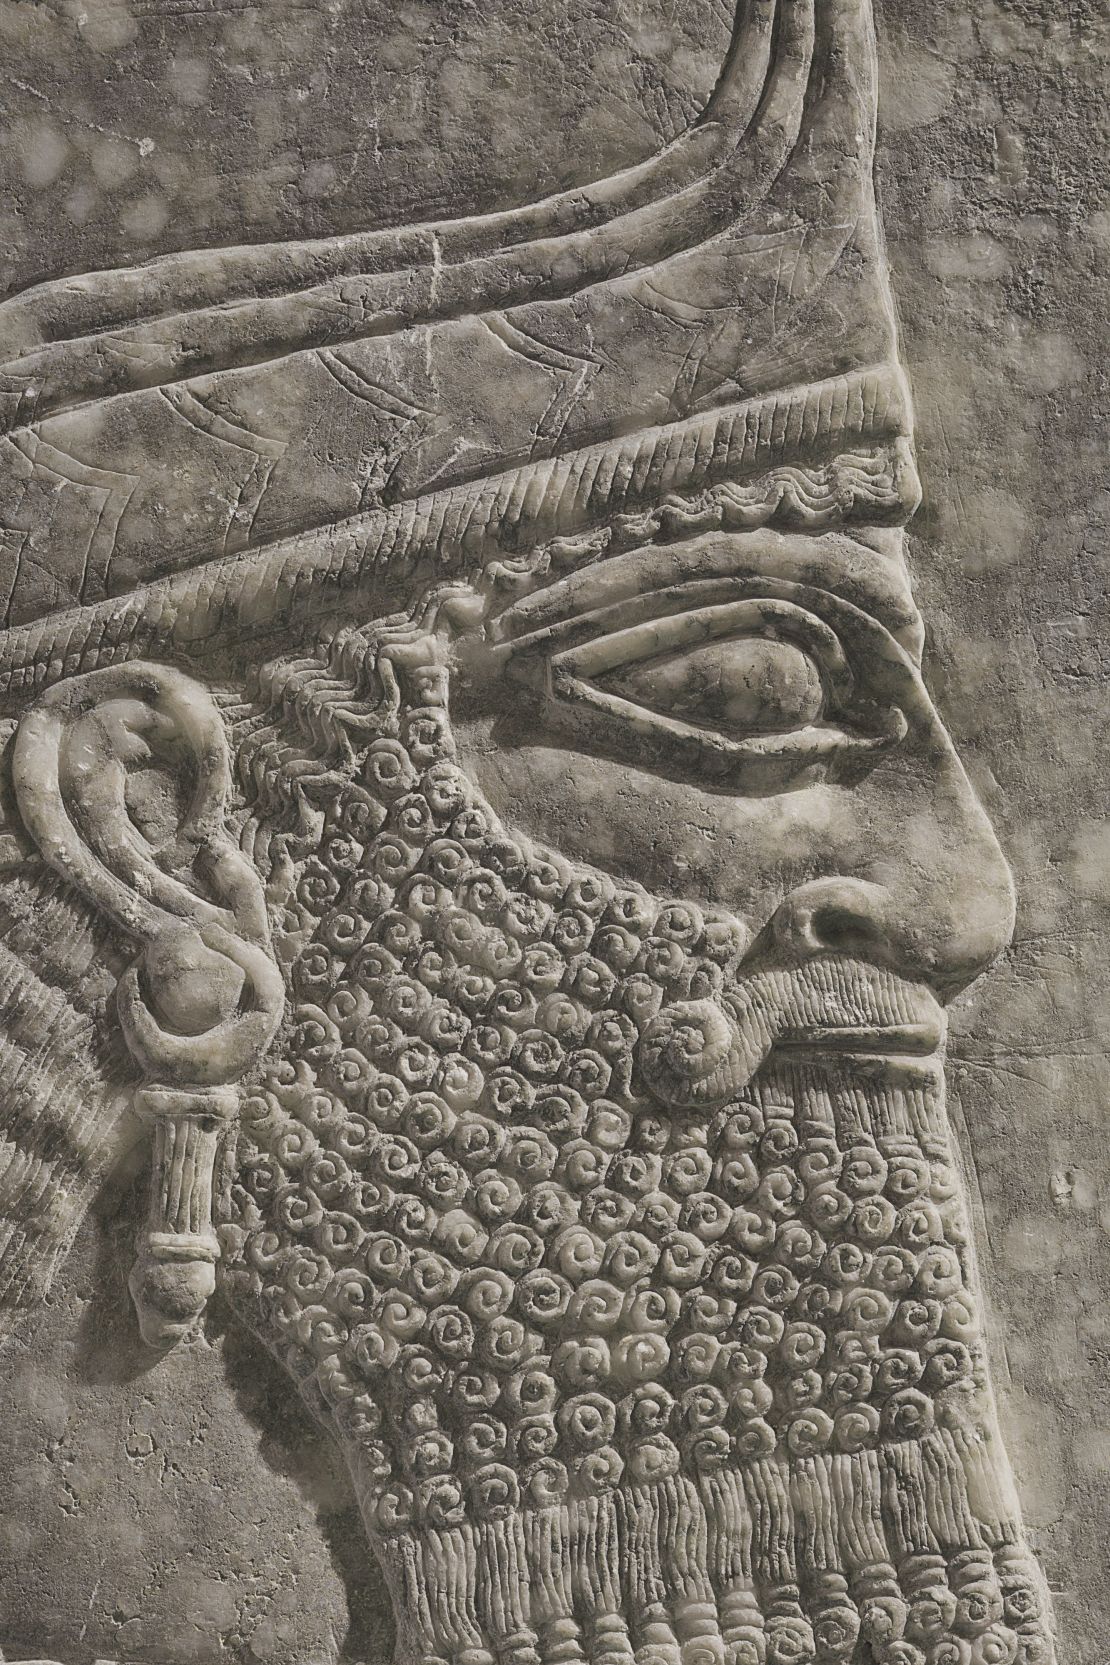 The bearded winged genius bears a striking resemblance to King Ashurnasirpal II.